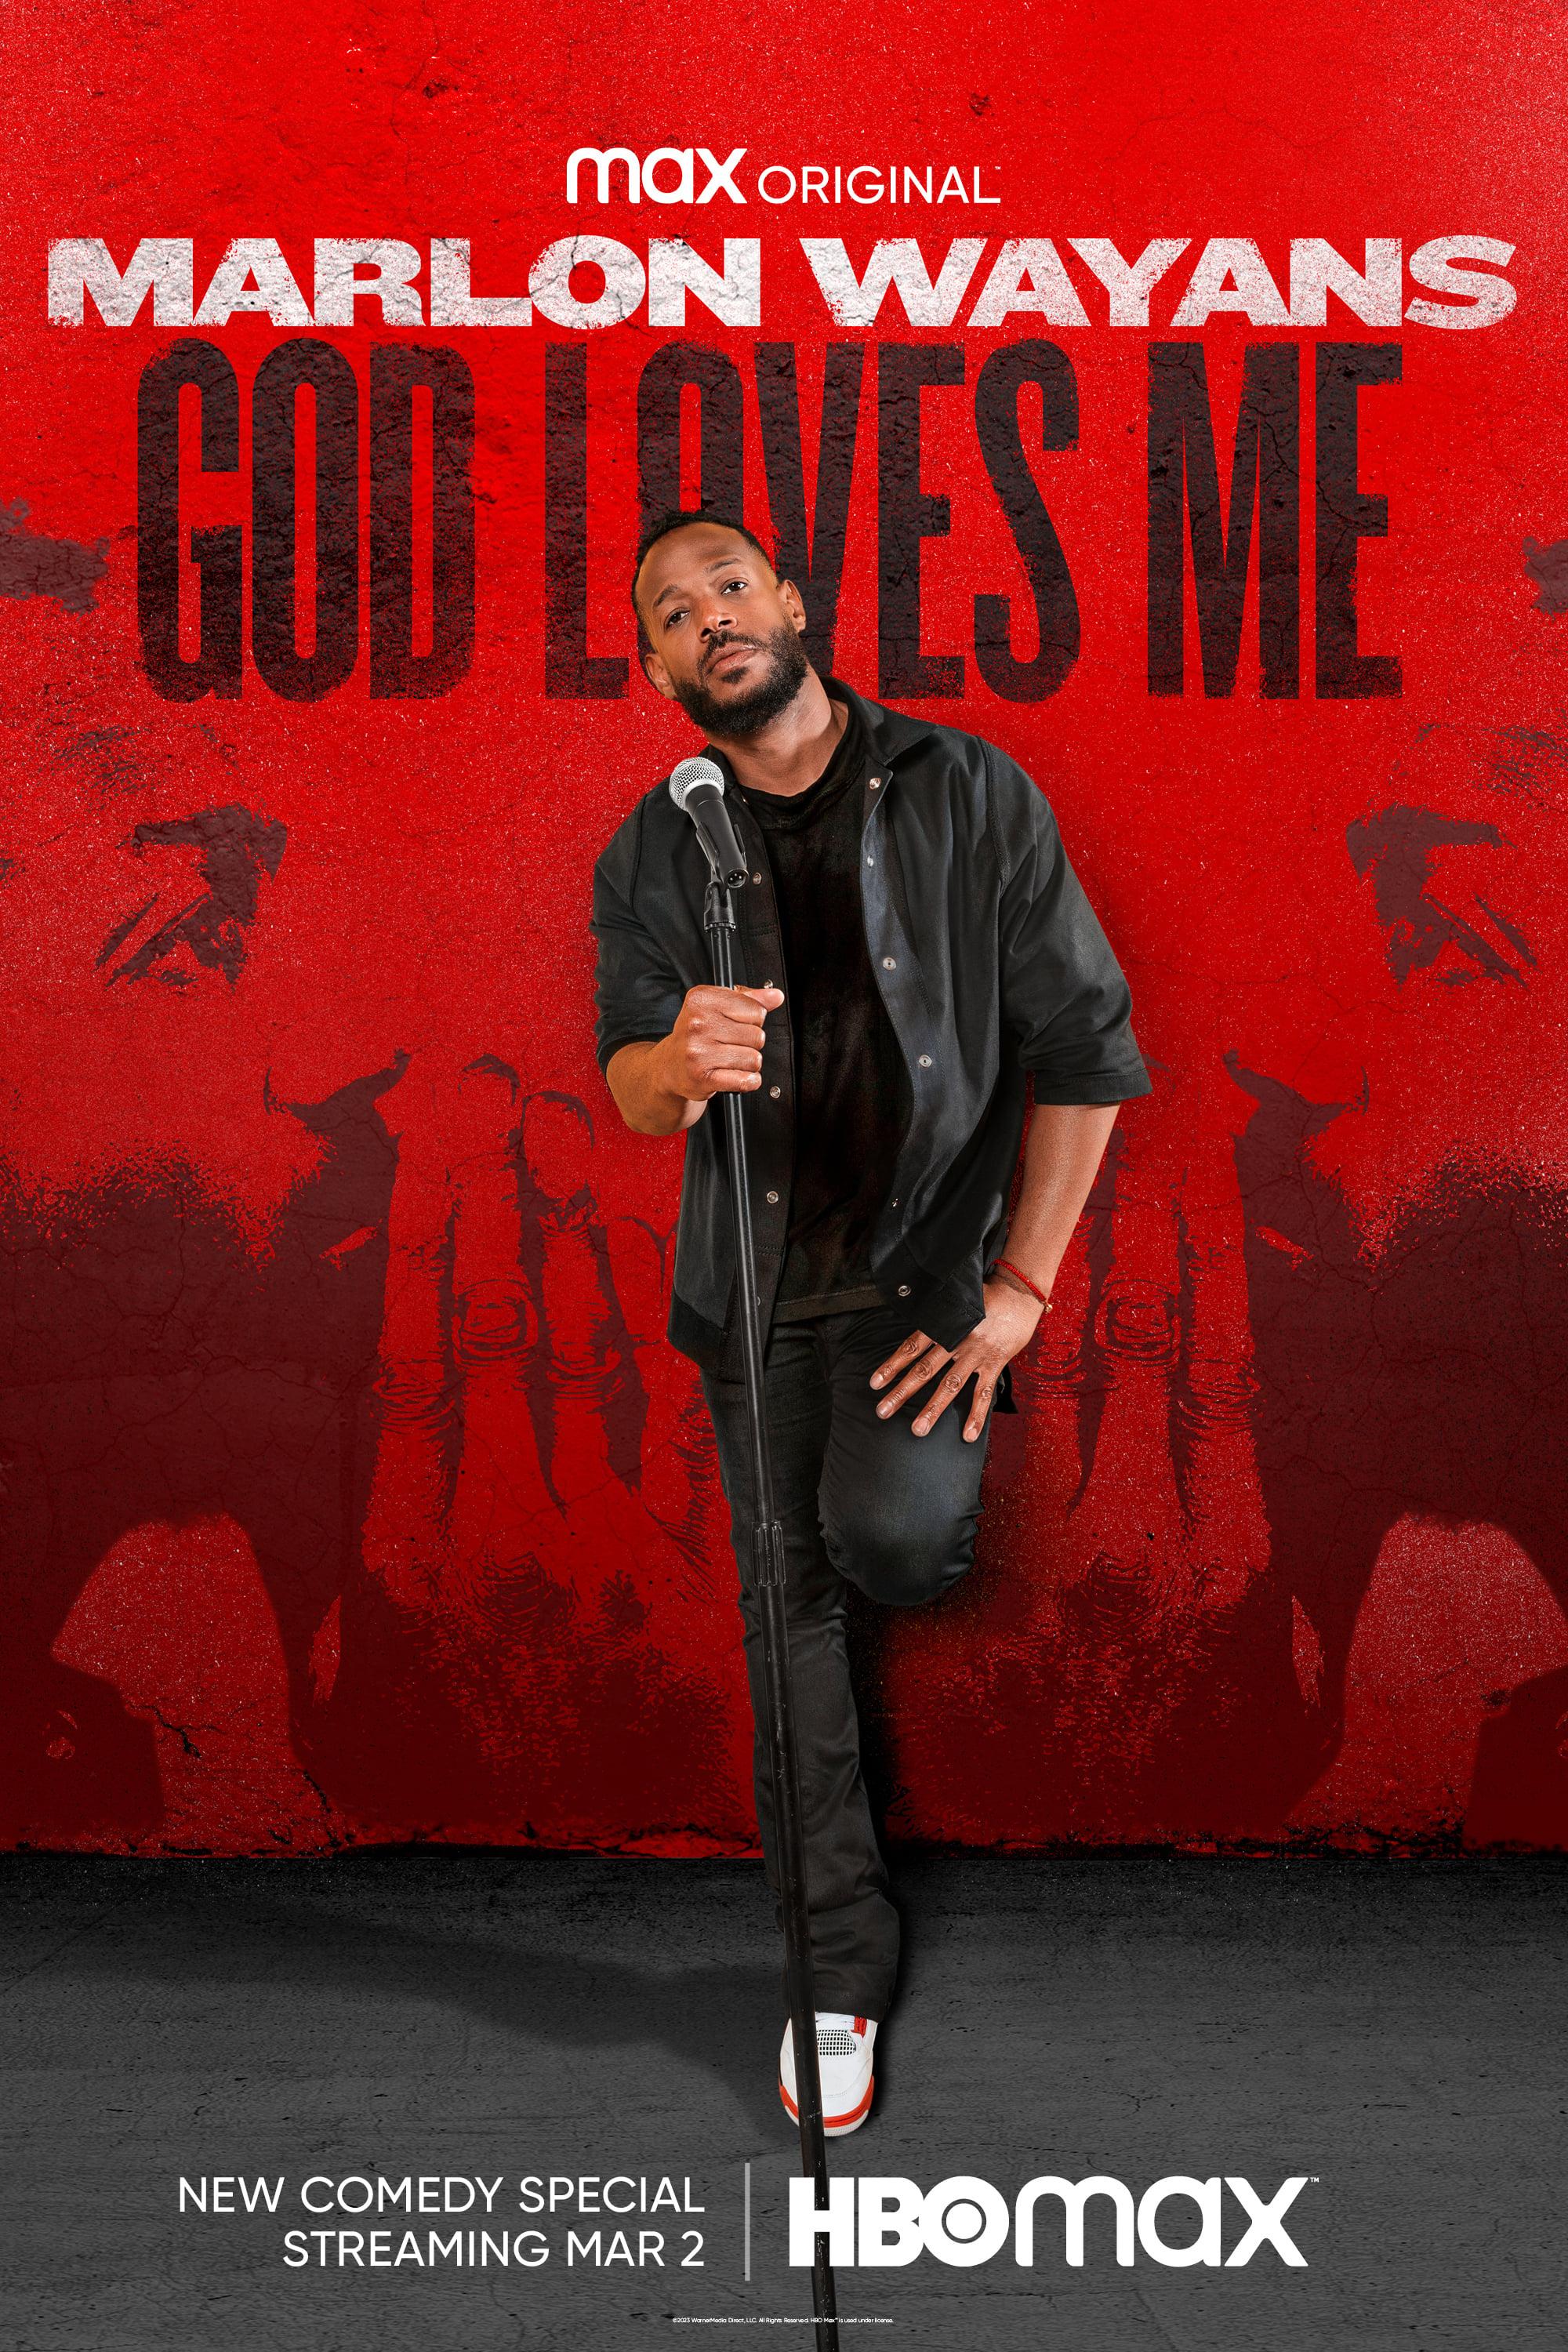 Marlon Wayans: God Loves Me poster